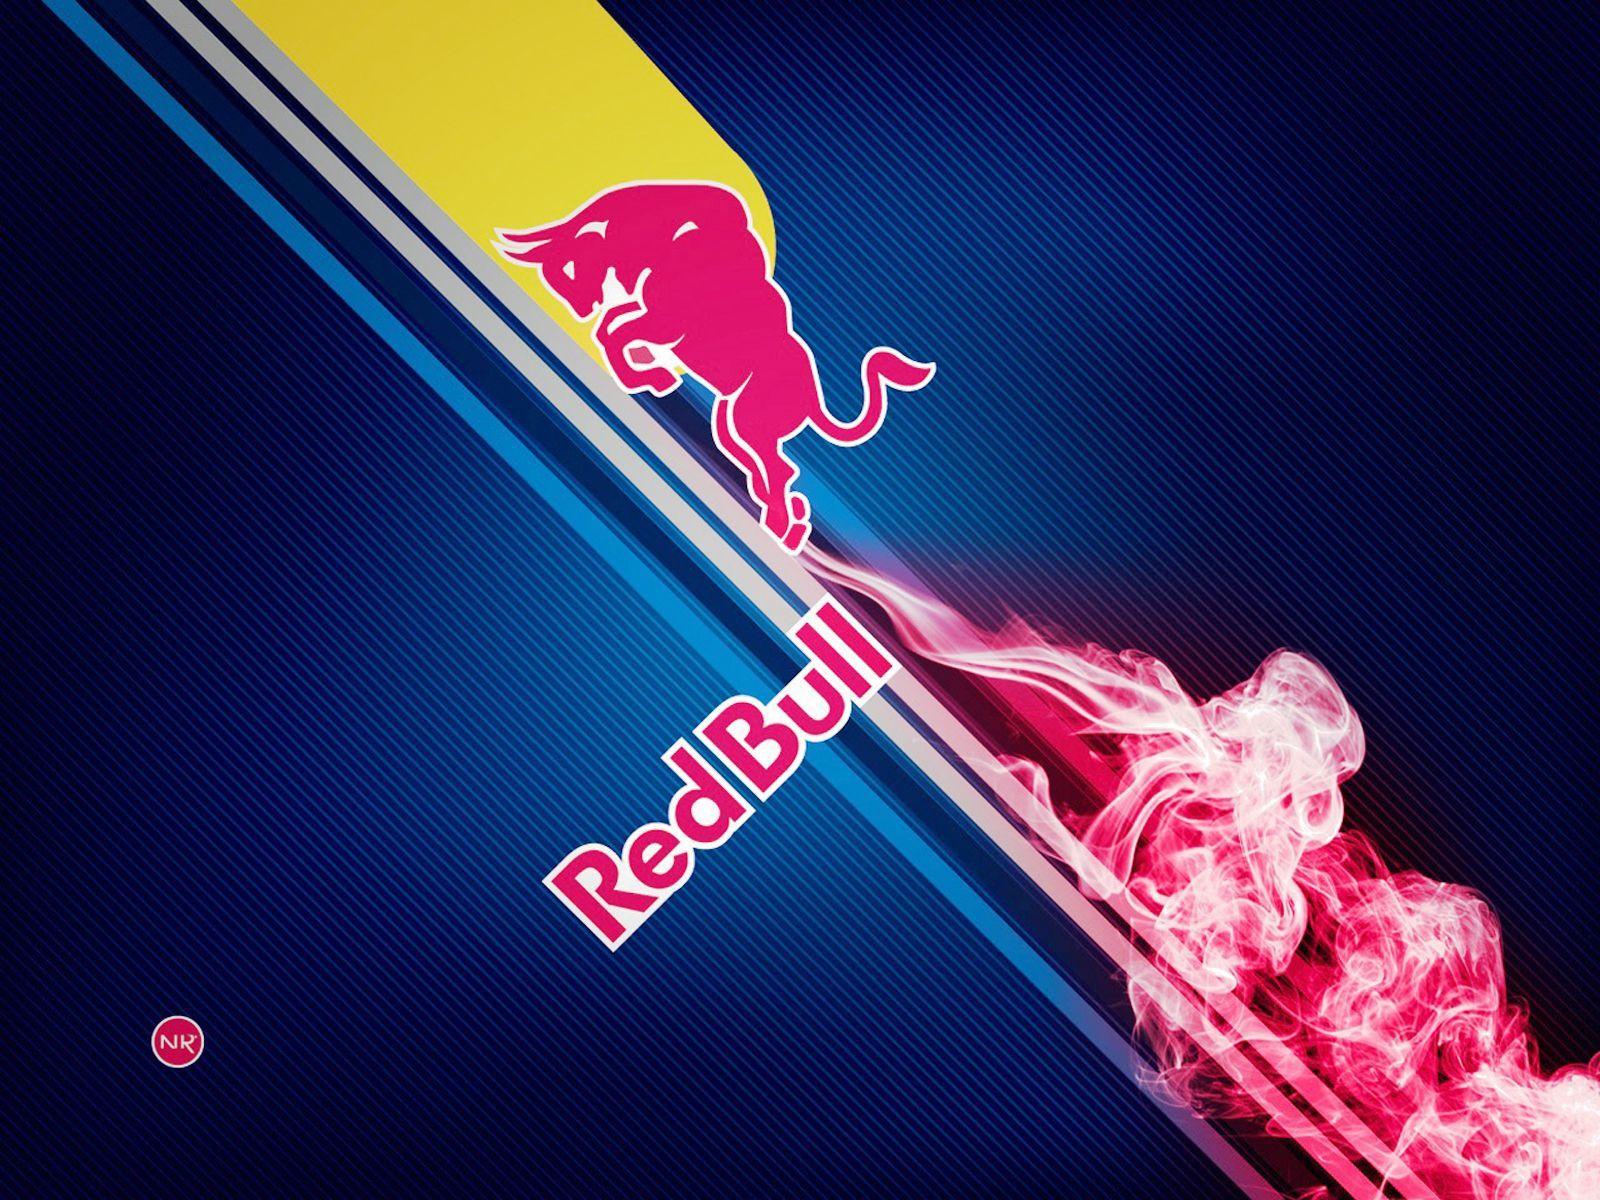 Red Bull Logo Wallpaper HD For Desktop Collection. My favorite